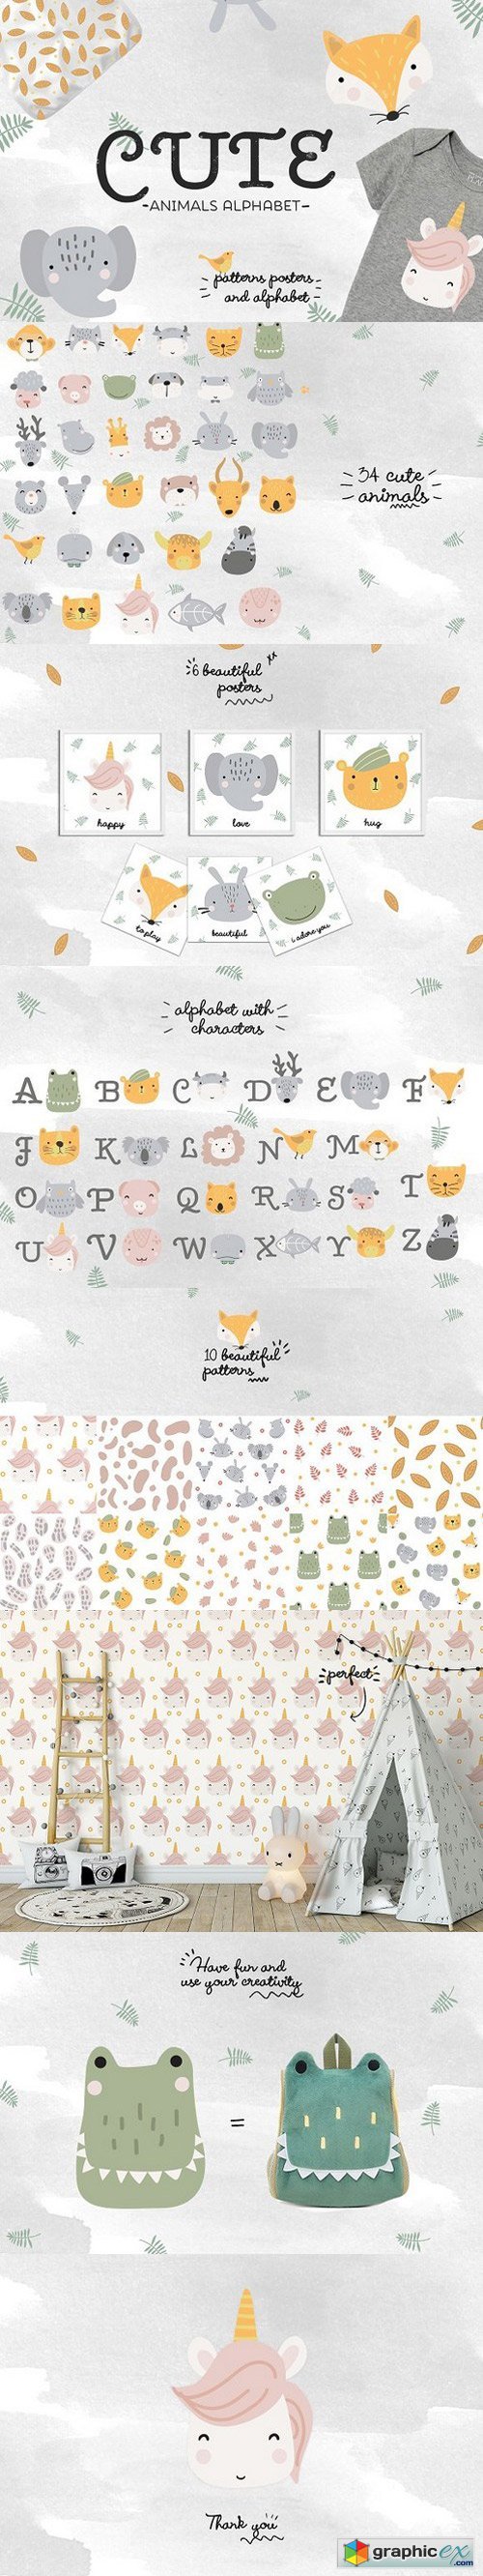 Cute animals alphabet